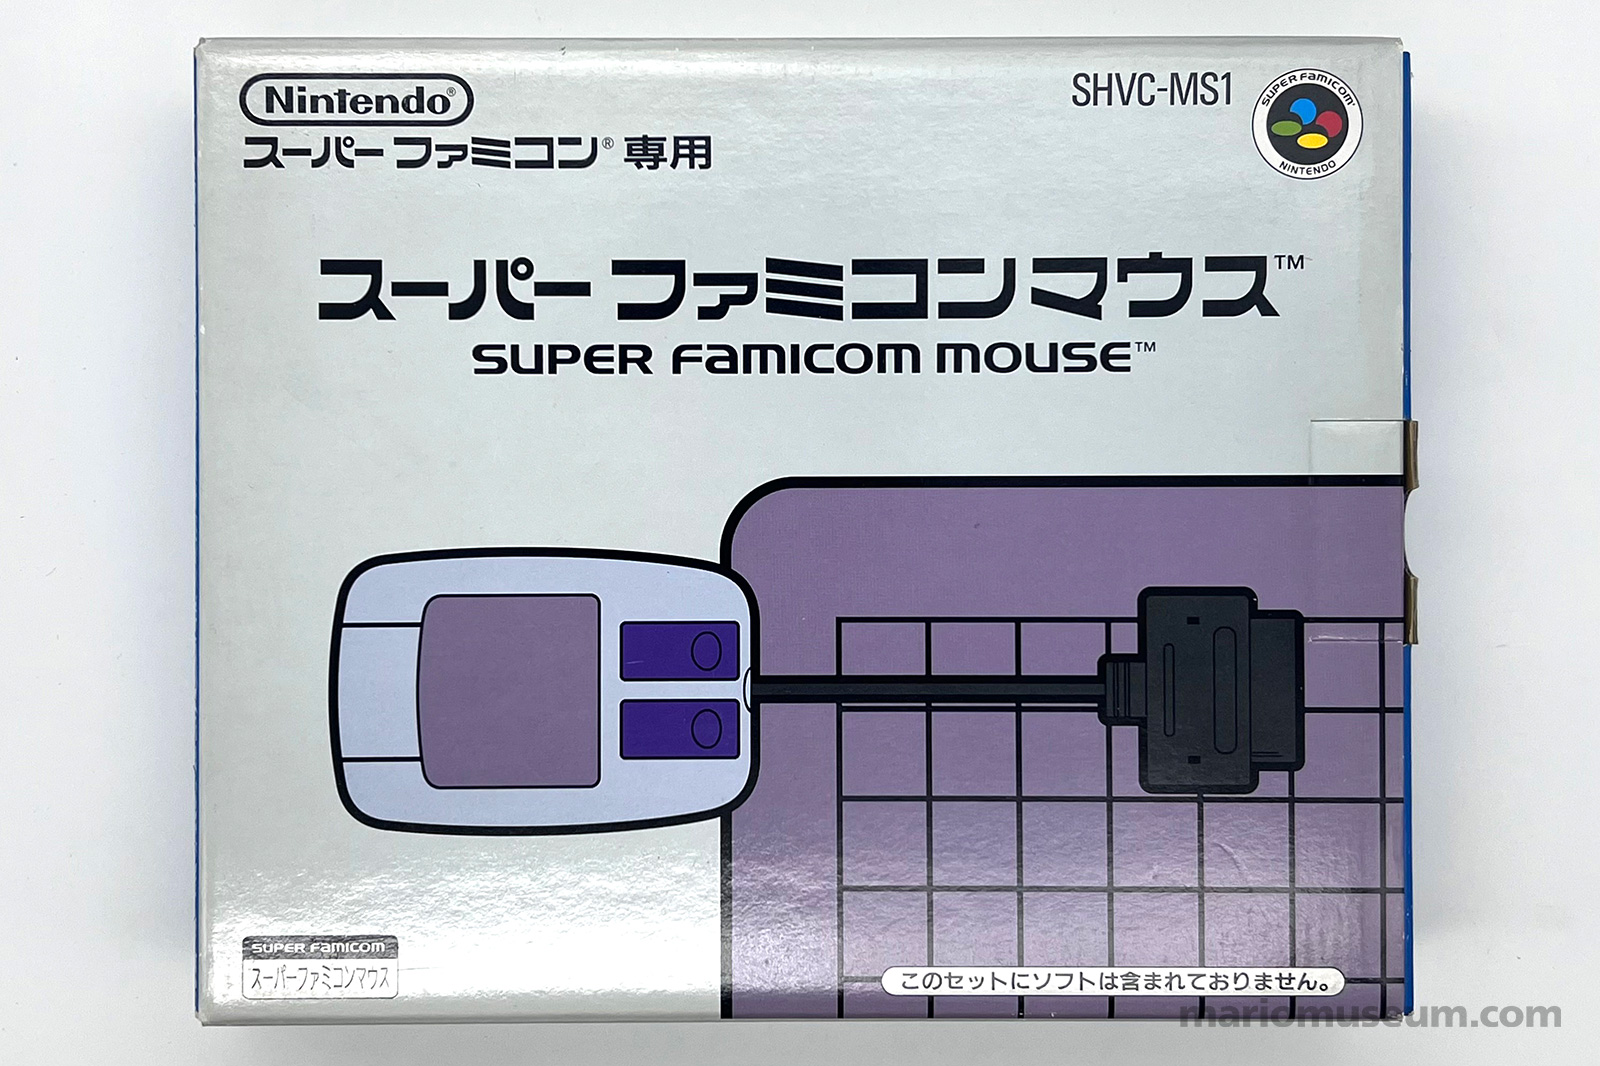 Super Famicom mouse